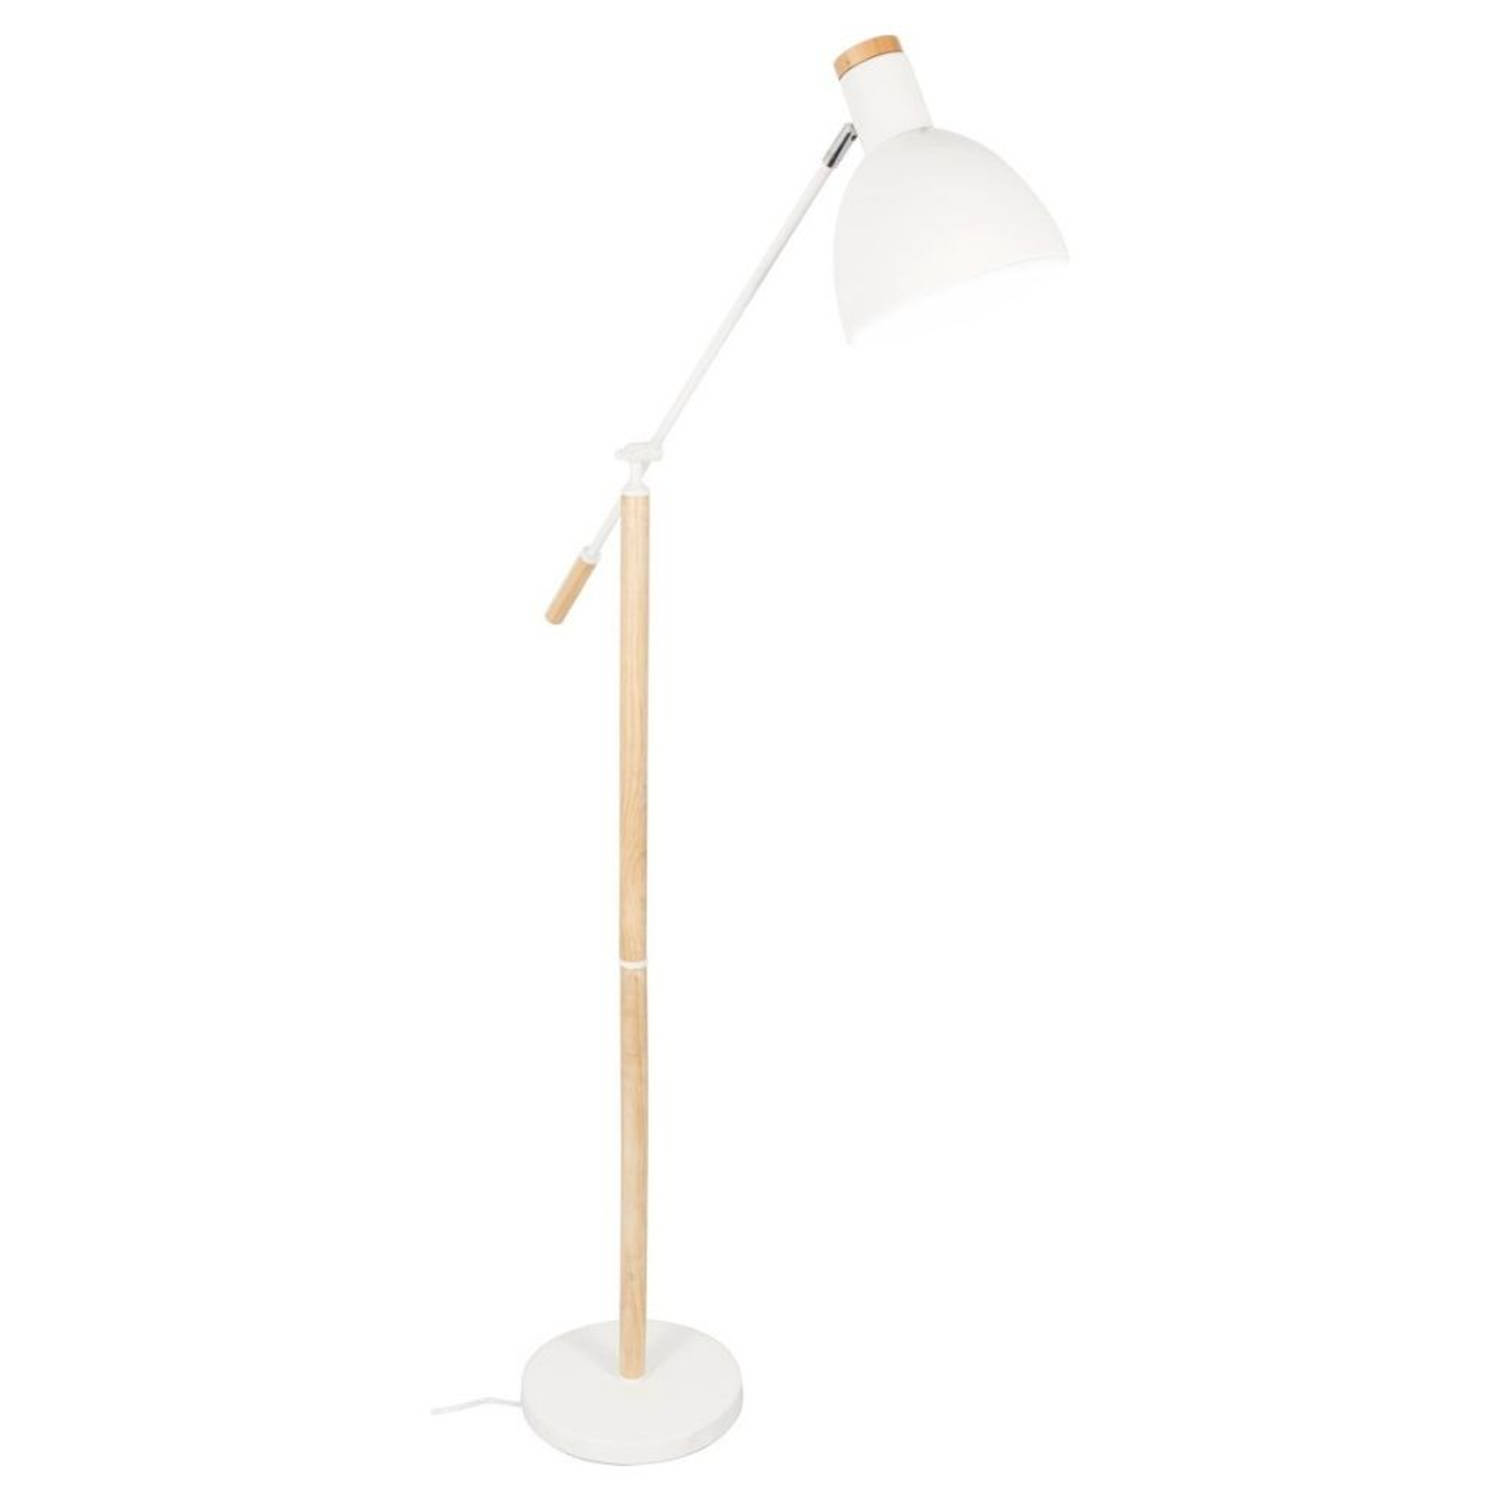 Grundig Vloerlamp - Elegant - 145 cm - Wit Blanke Hout - Minimalistisch - Losstaand - Snoer